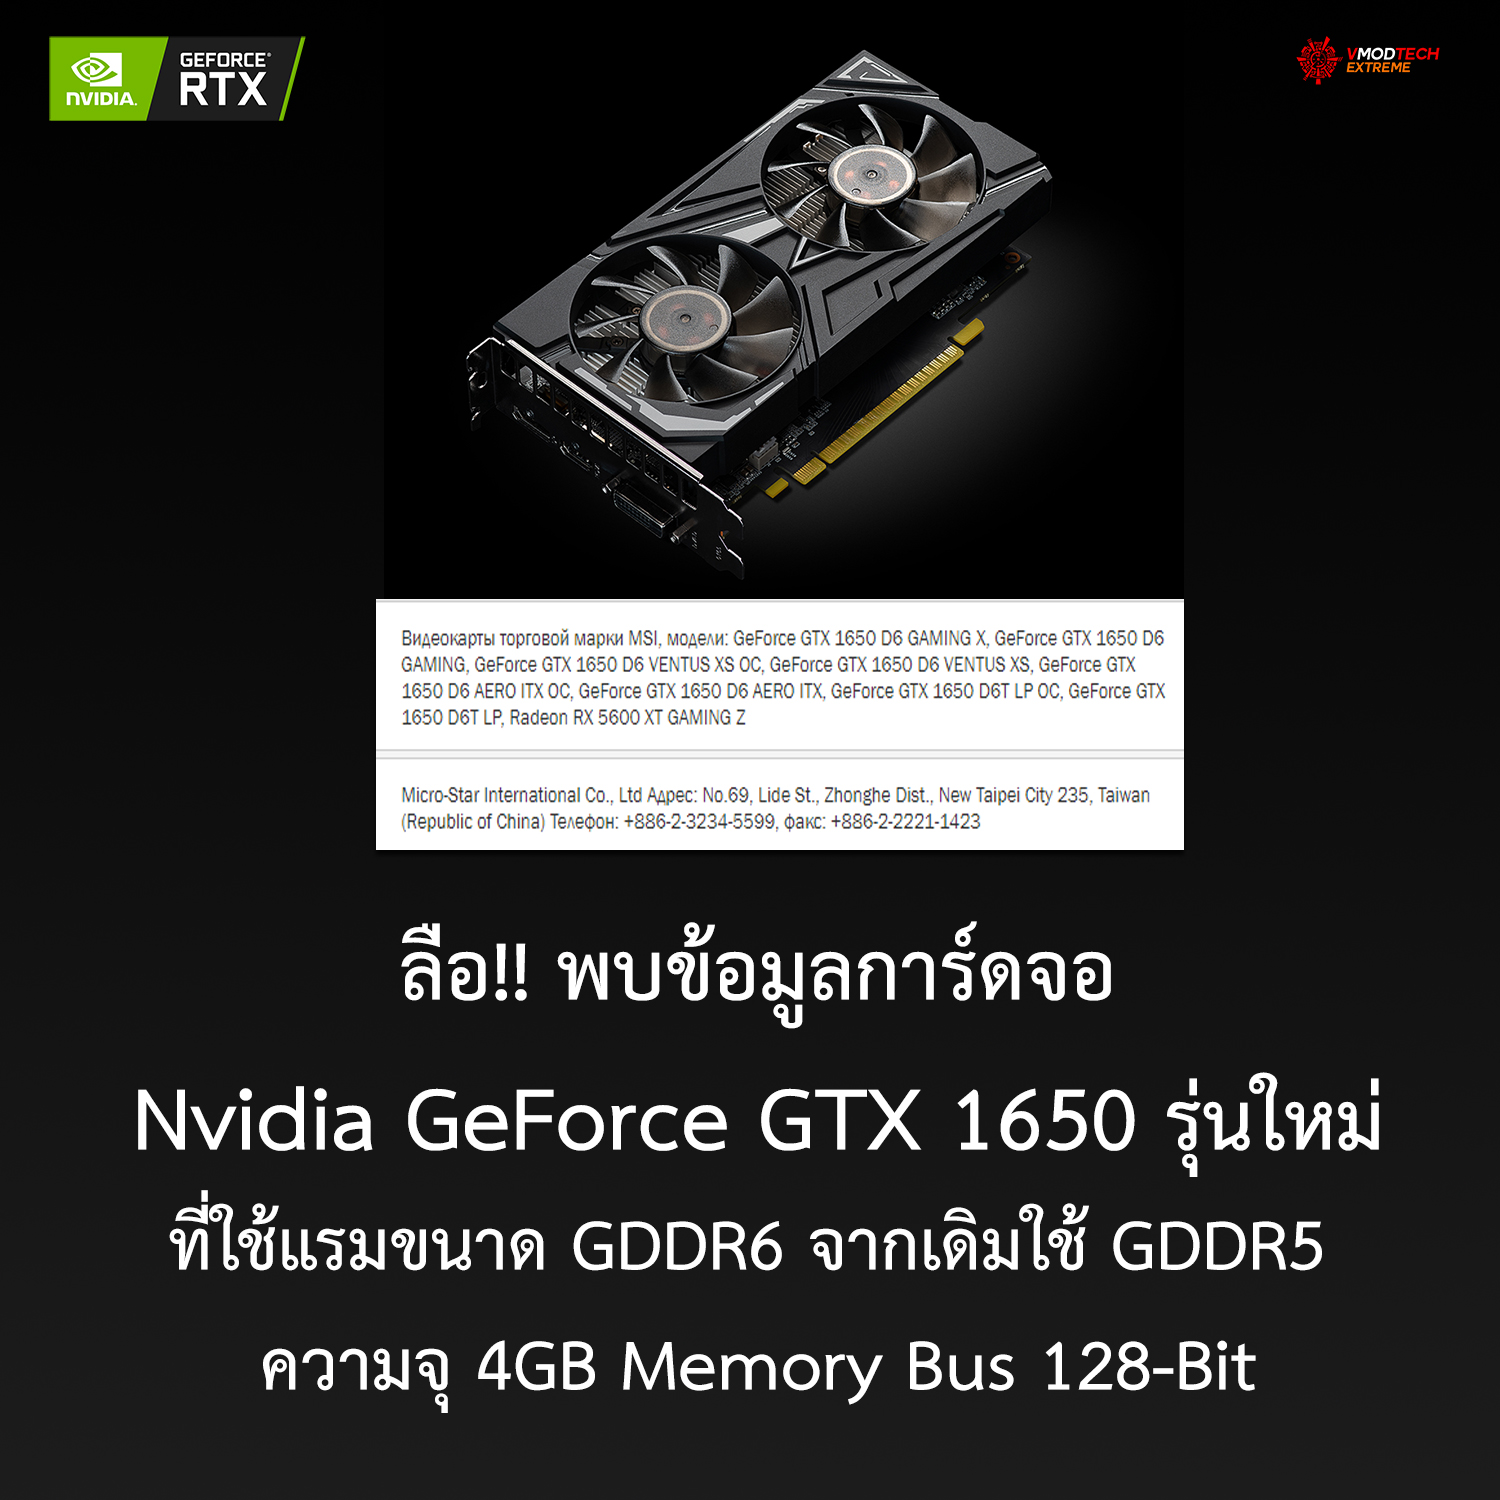 gtx 1650 gddr6 memory ลือ!! พบข้อมูลการ์ดจอ Nvidia GeForce GTX 1650 รุ่นใหม่ที่ใช้แรมขนาด GDDR6 